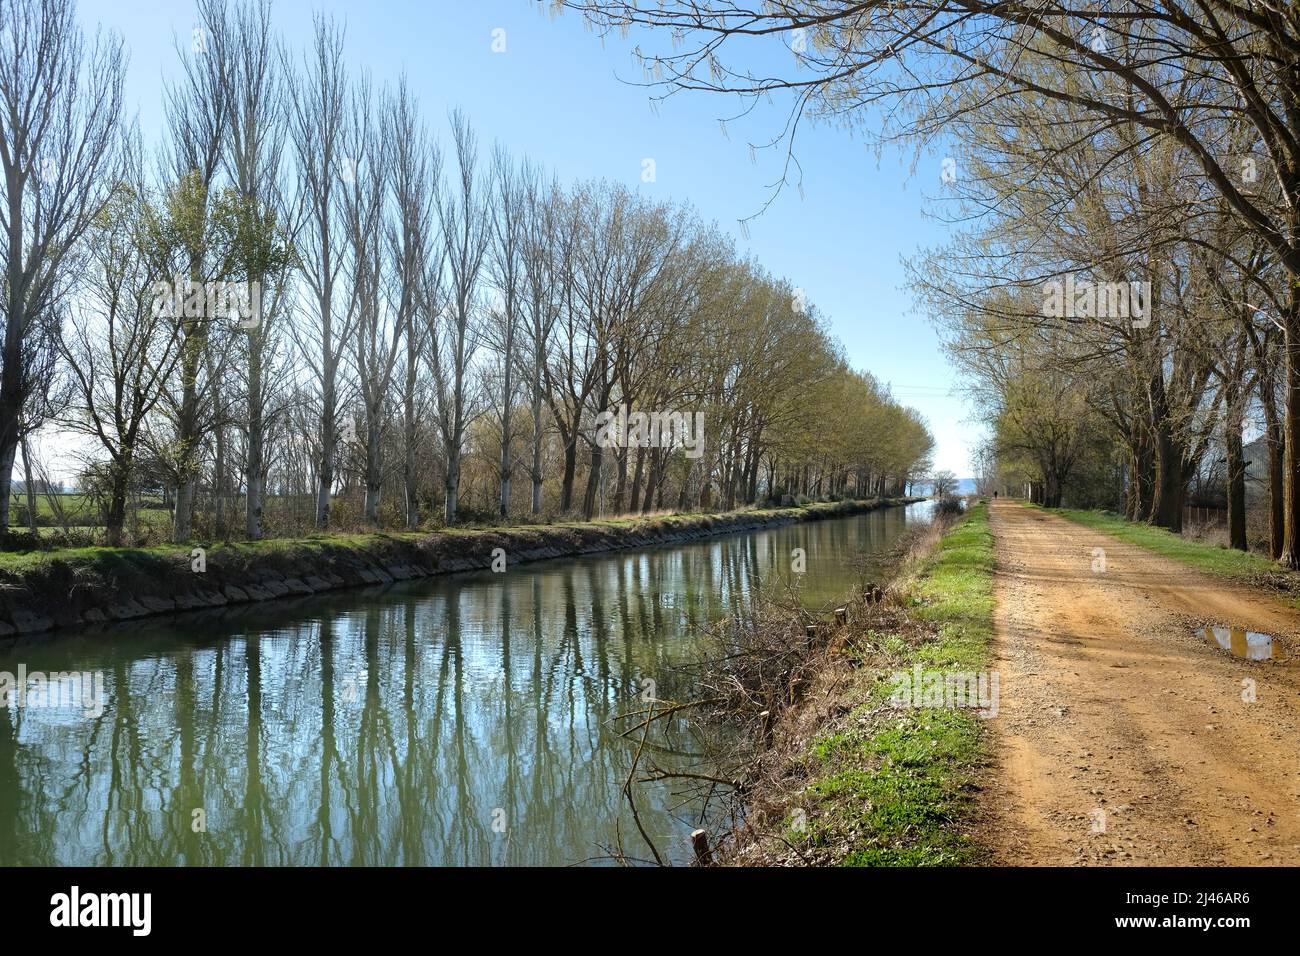 Canal of Castile - Canal de Castilla - near the town of Becerril de Campos, Castile and León, Spain Stock Photo